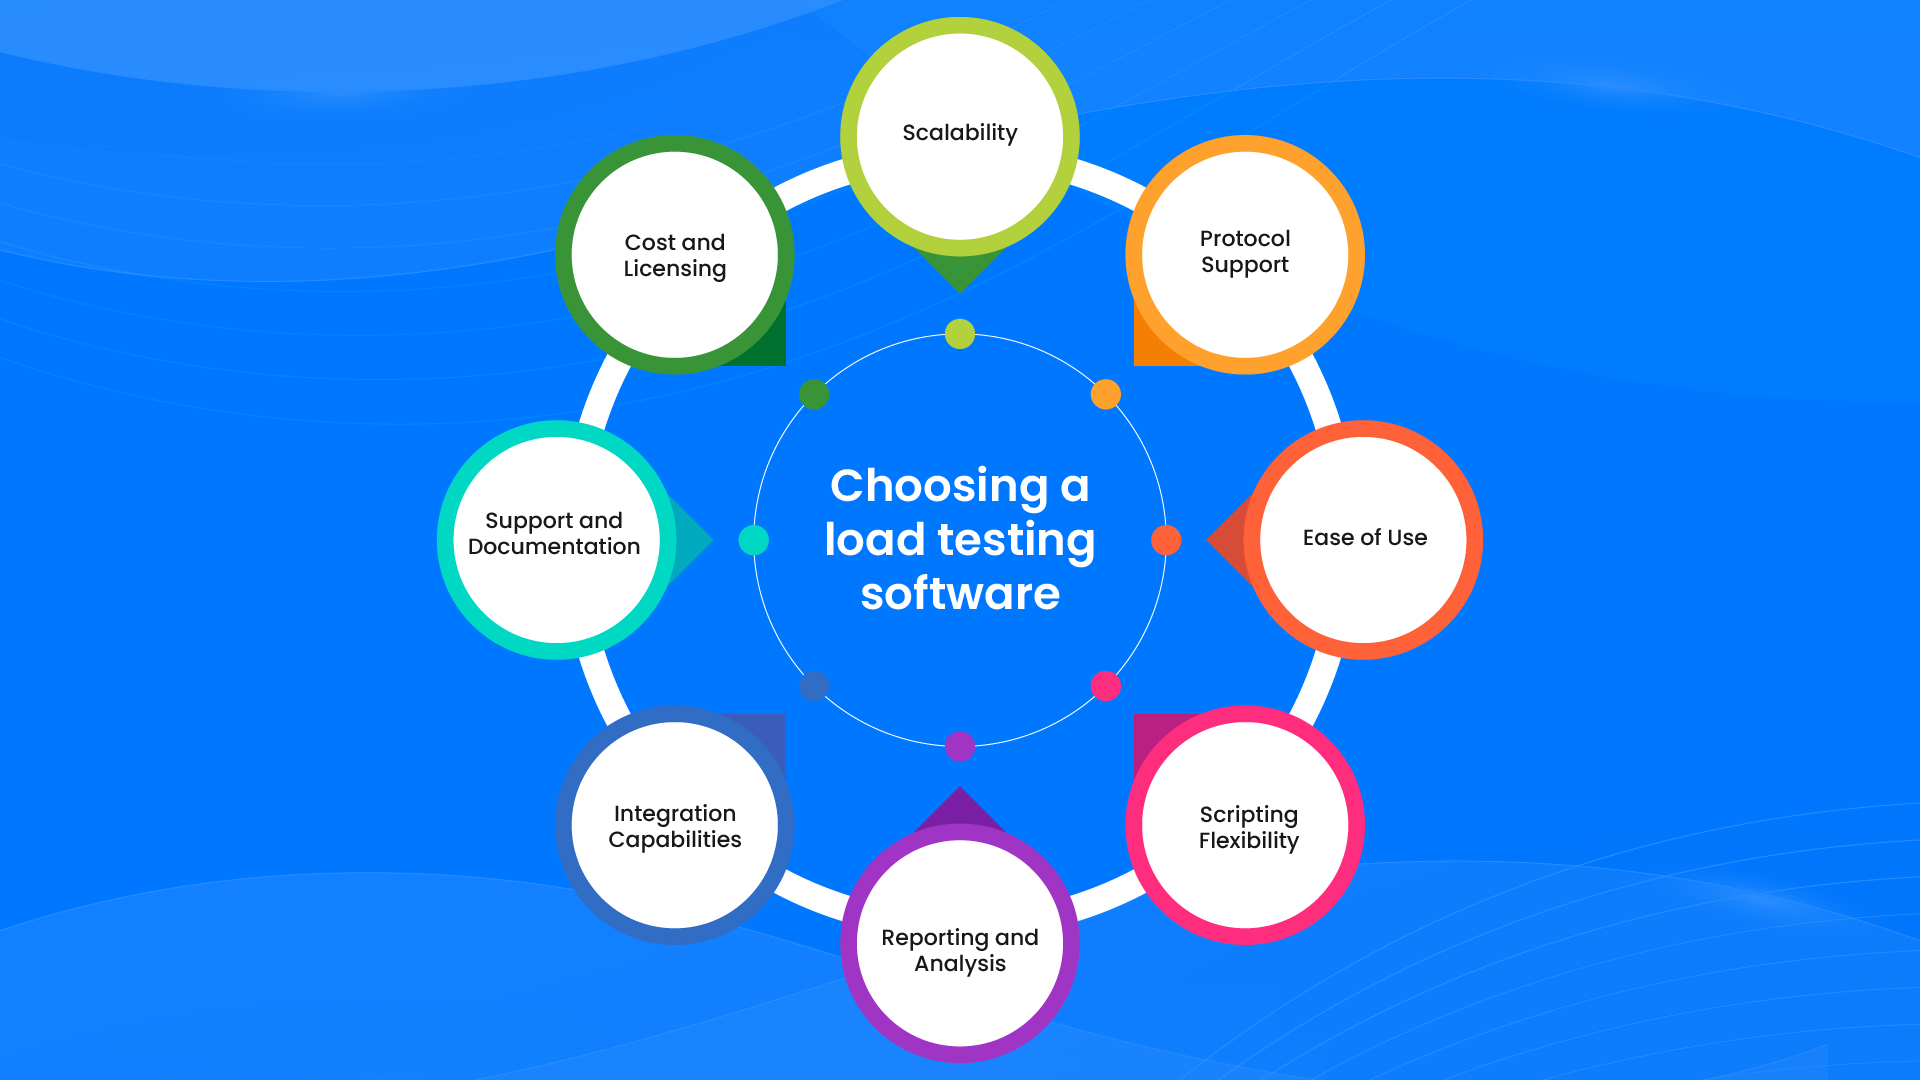 Choosing a load testing software